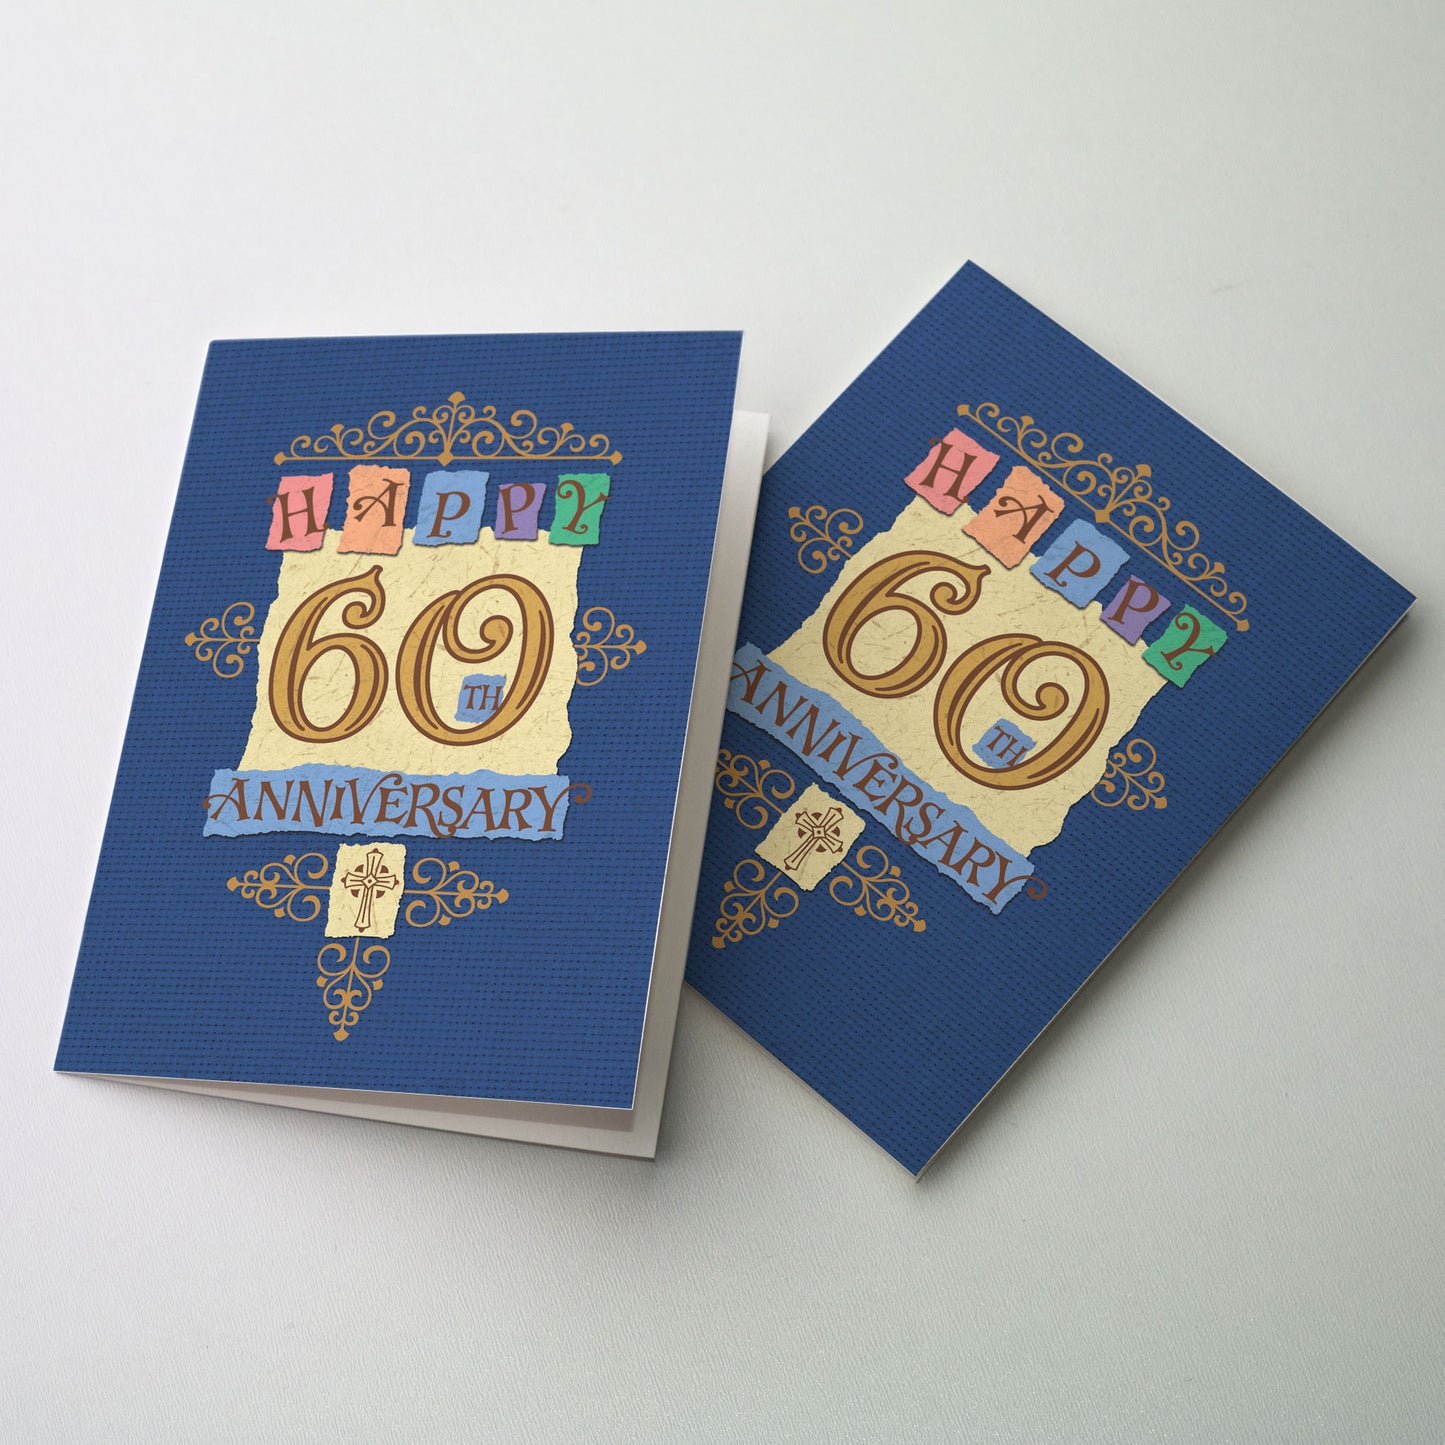 Happy 60th Anniversary - General 60th Anniversary Card